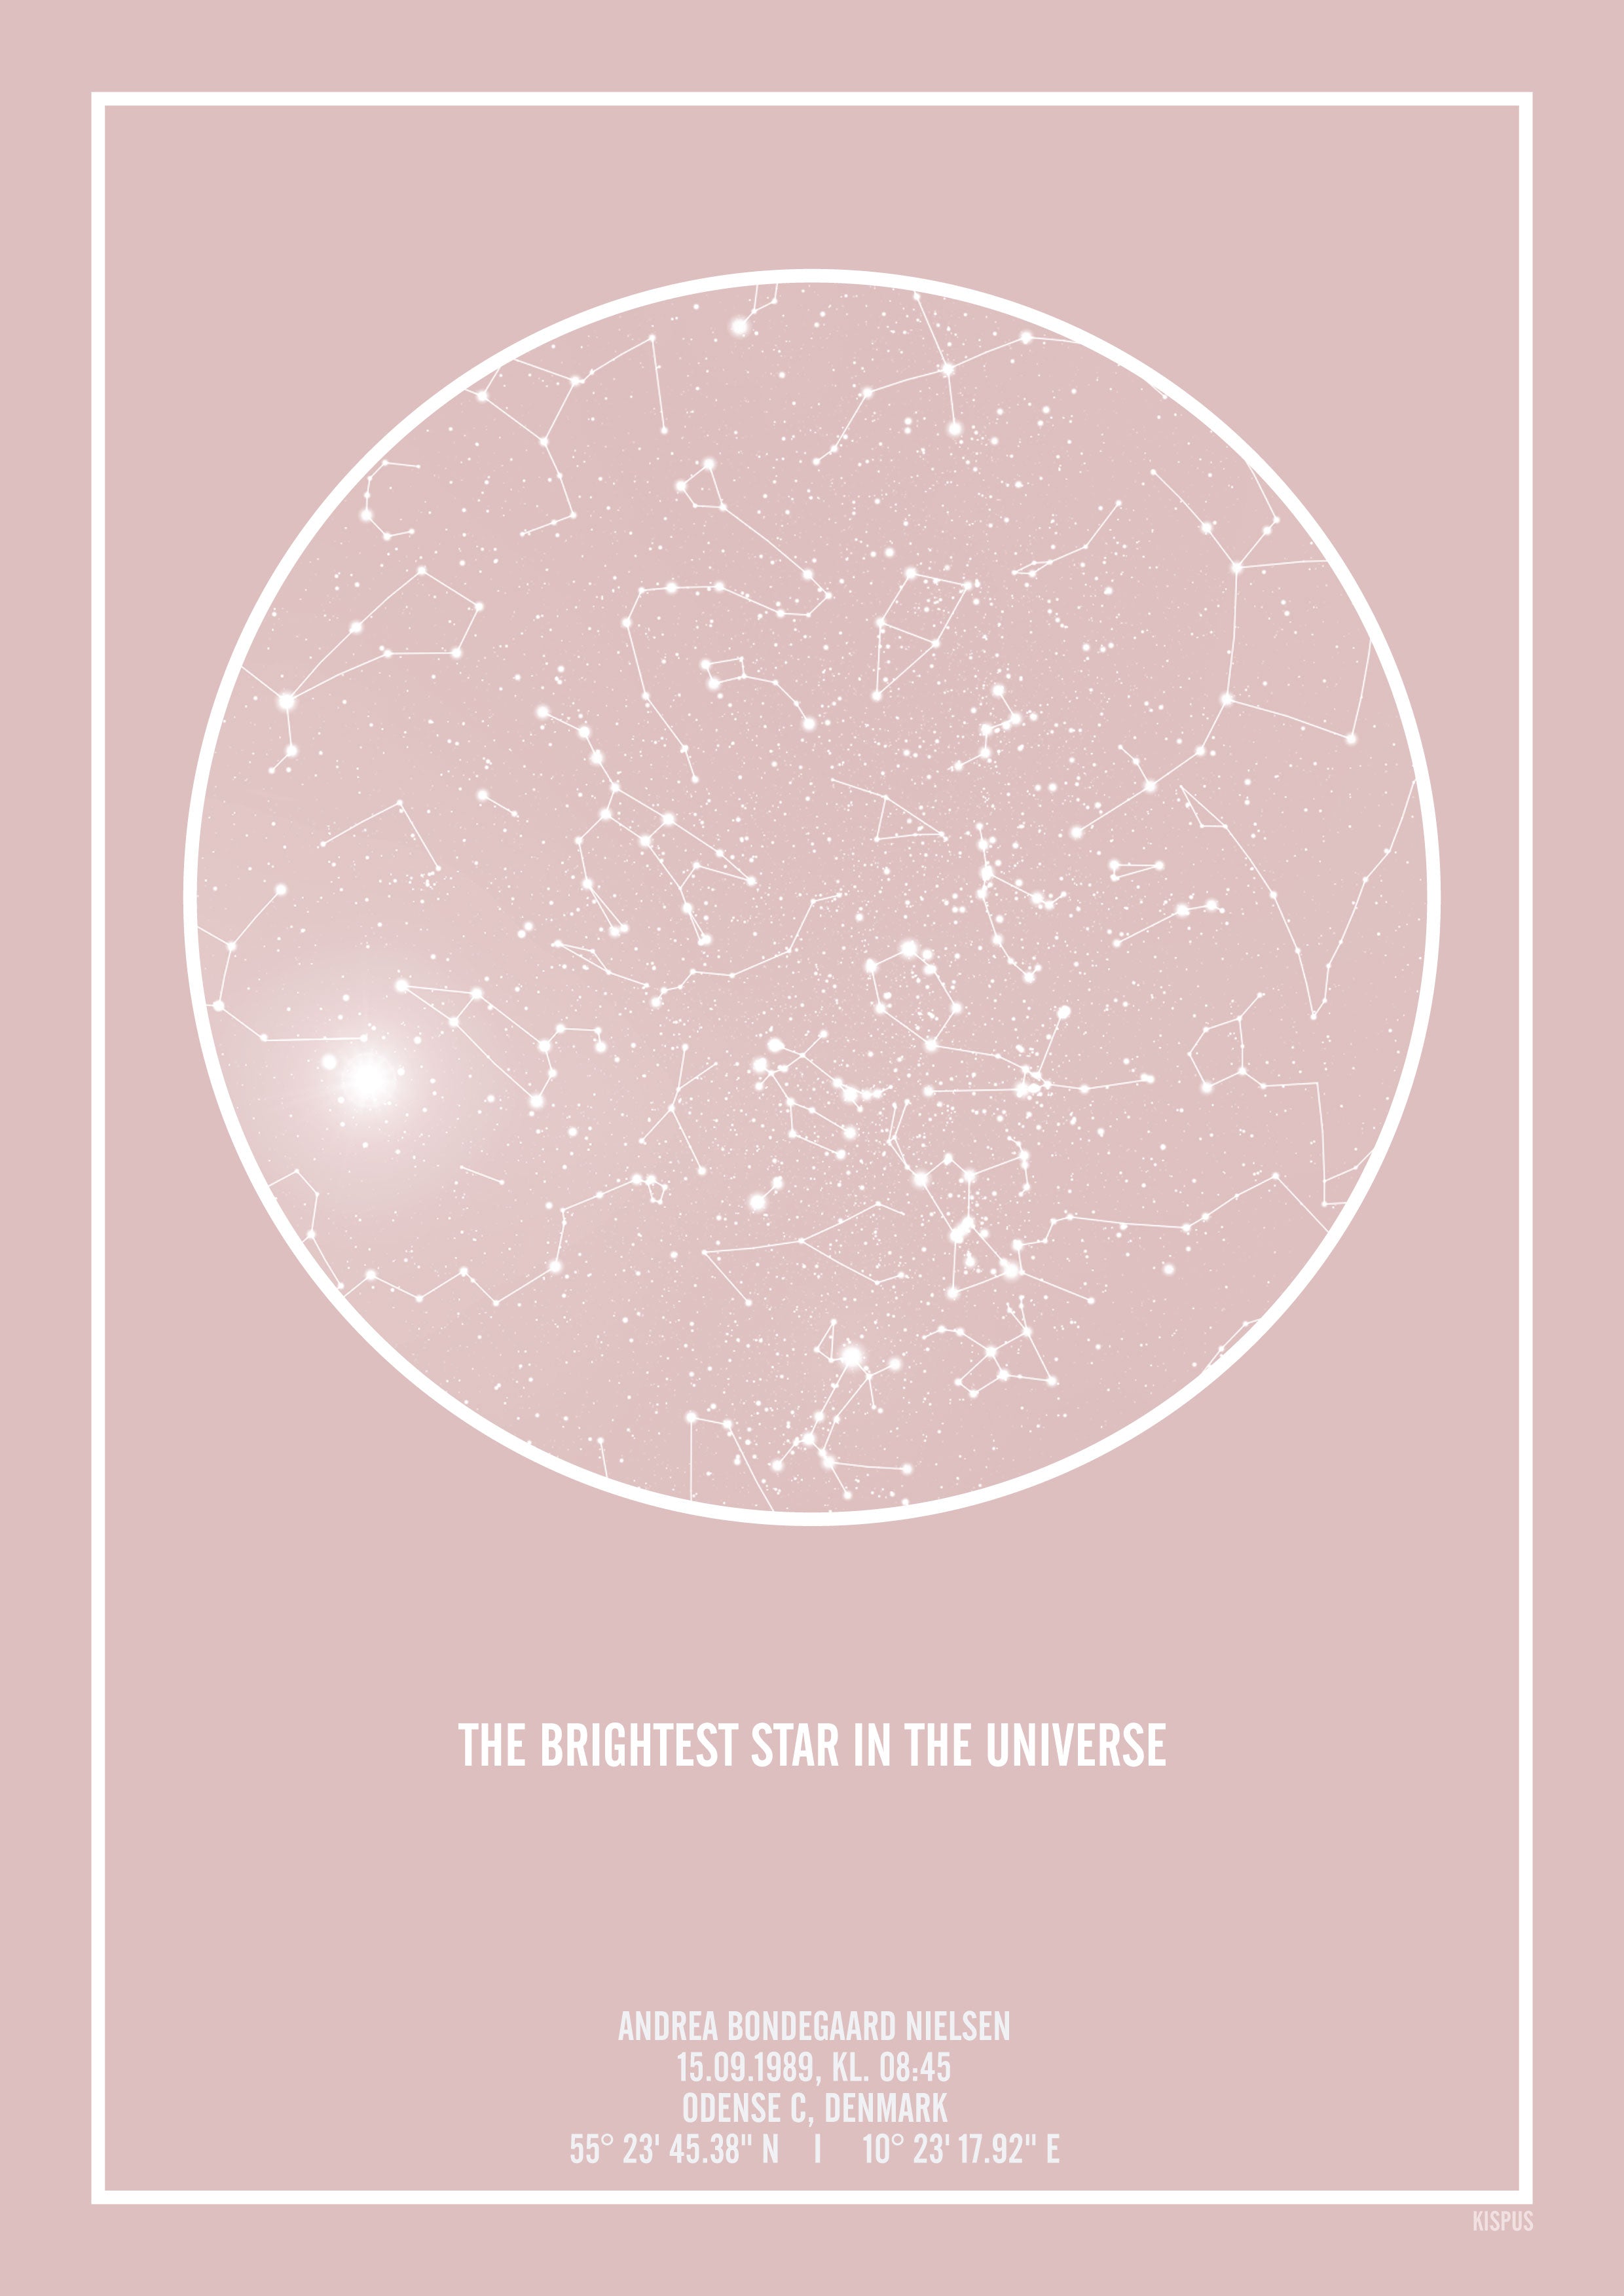 Se PERSONLIG STJERNEHIMMEL PLAKAT (LYSERØD) - 30x40 / Hvid tekst og lyserød stjernehimmel / Stjernehimmel med stjernebilleder hos KISPUS